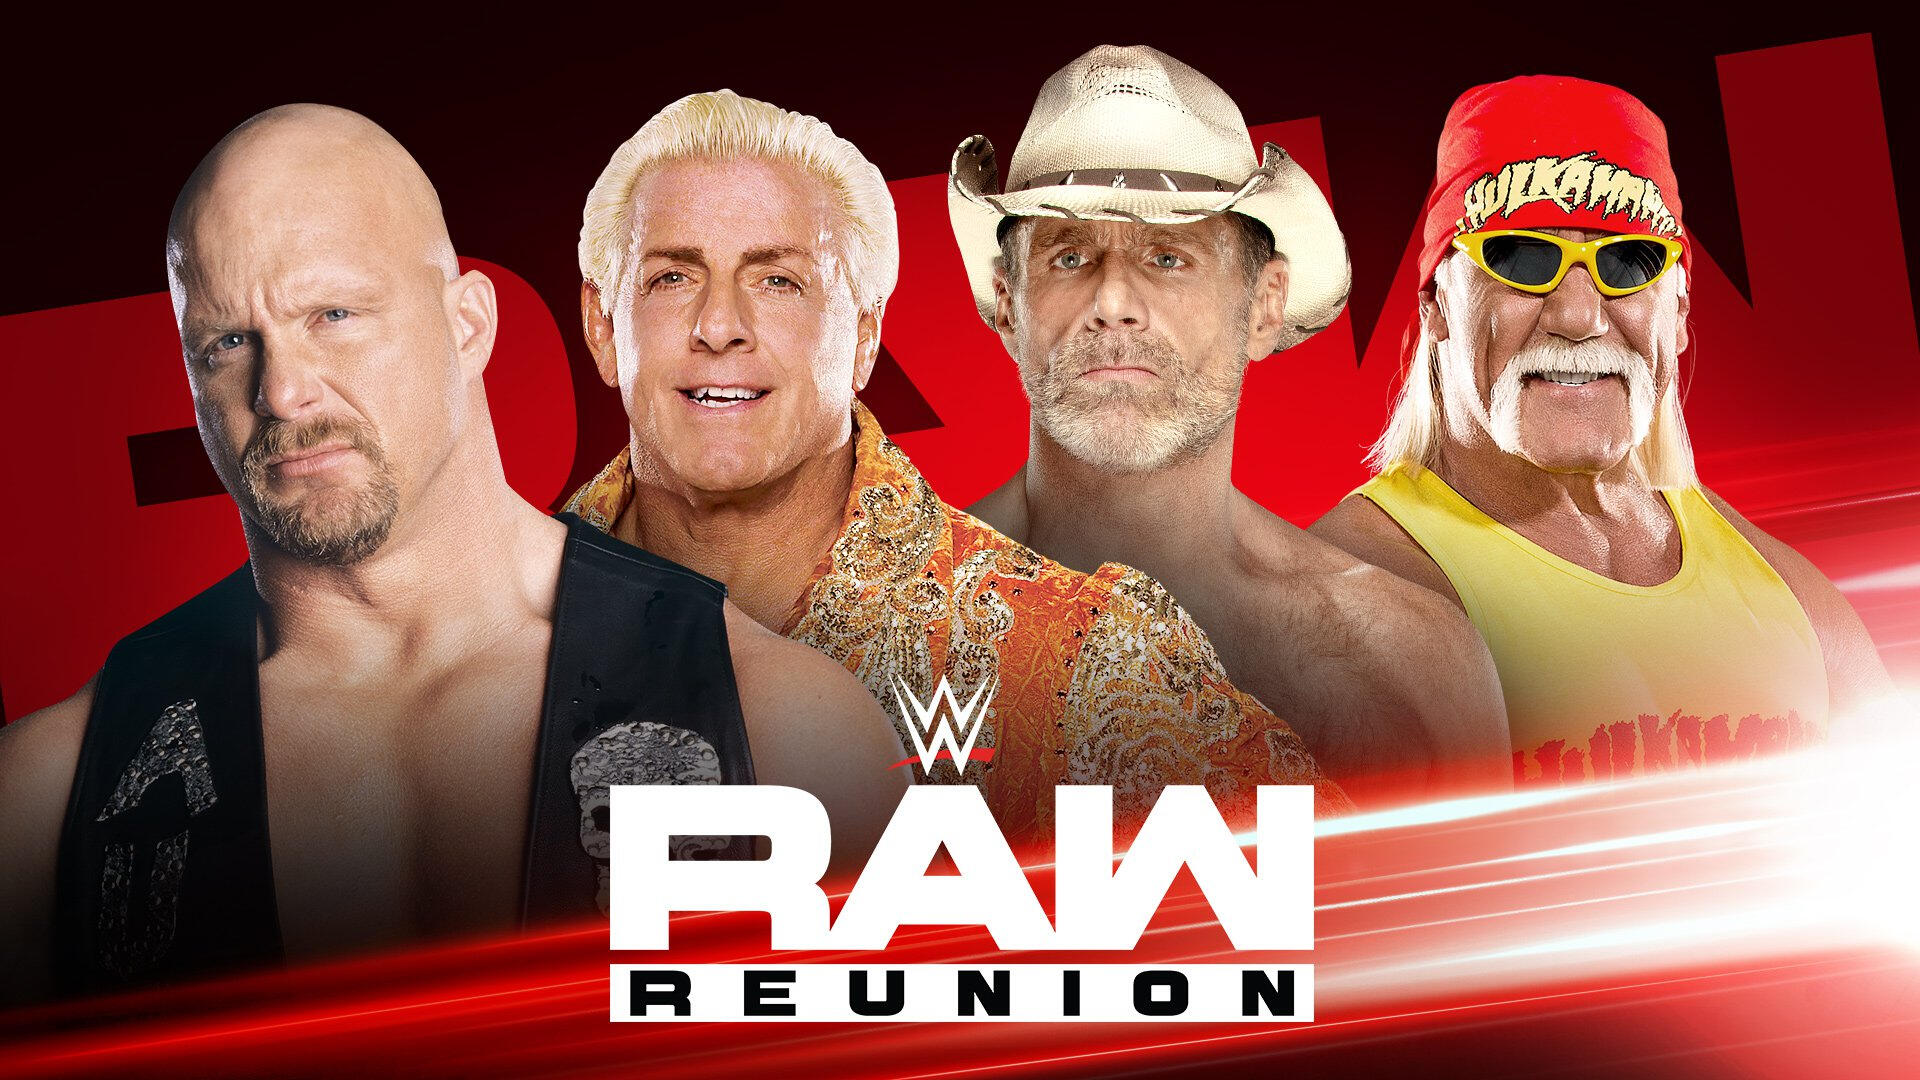 Wwe Monday Night Raw Highlights For July 22 2019 Raw Reunion